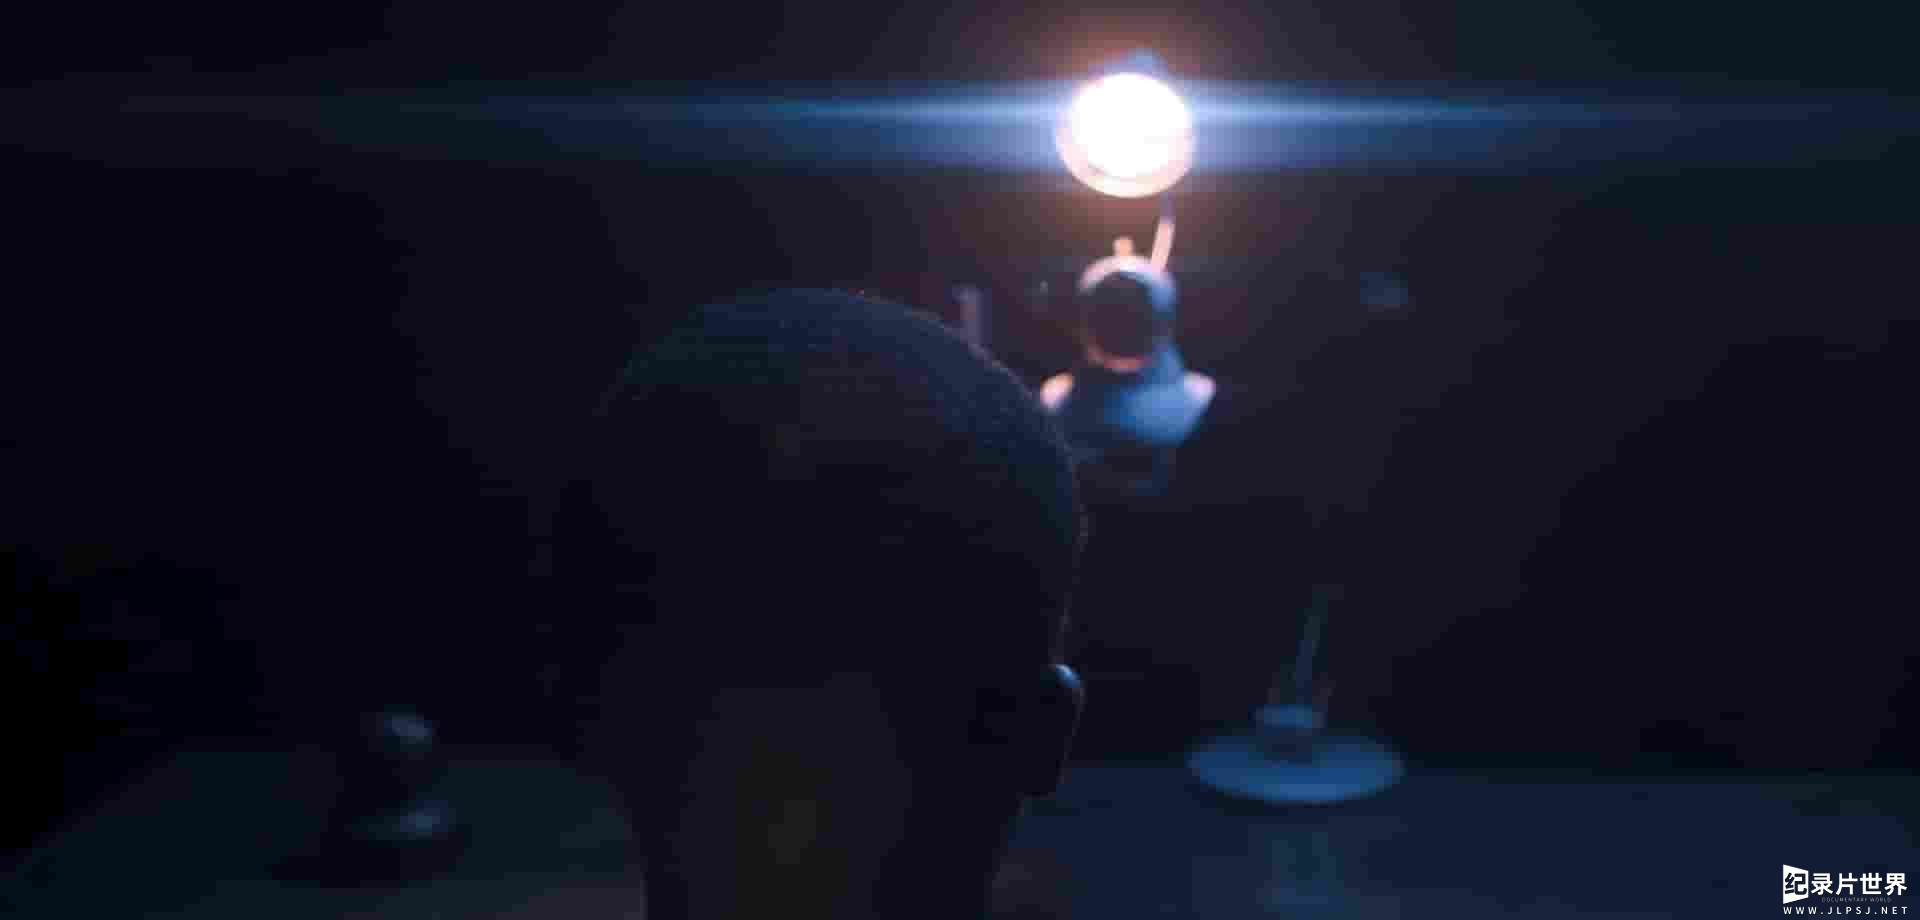 HBO纪录片《人格测试背后的黑暗真相 Persona: The Dark Truth Behind Personality Tests 2021》全1集